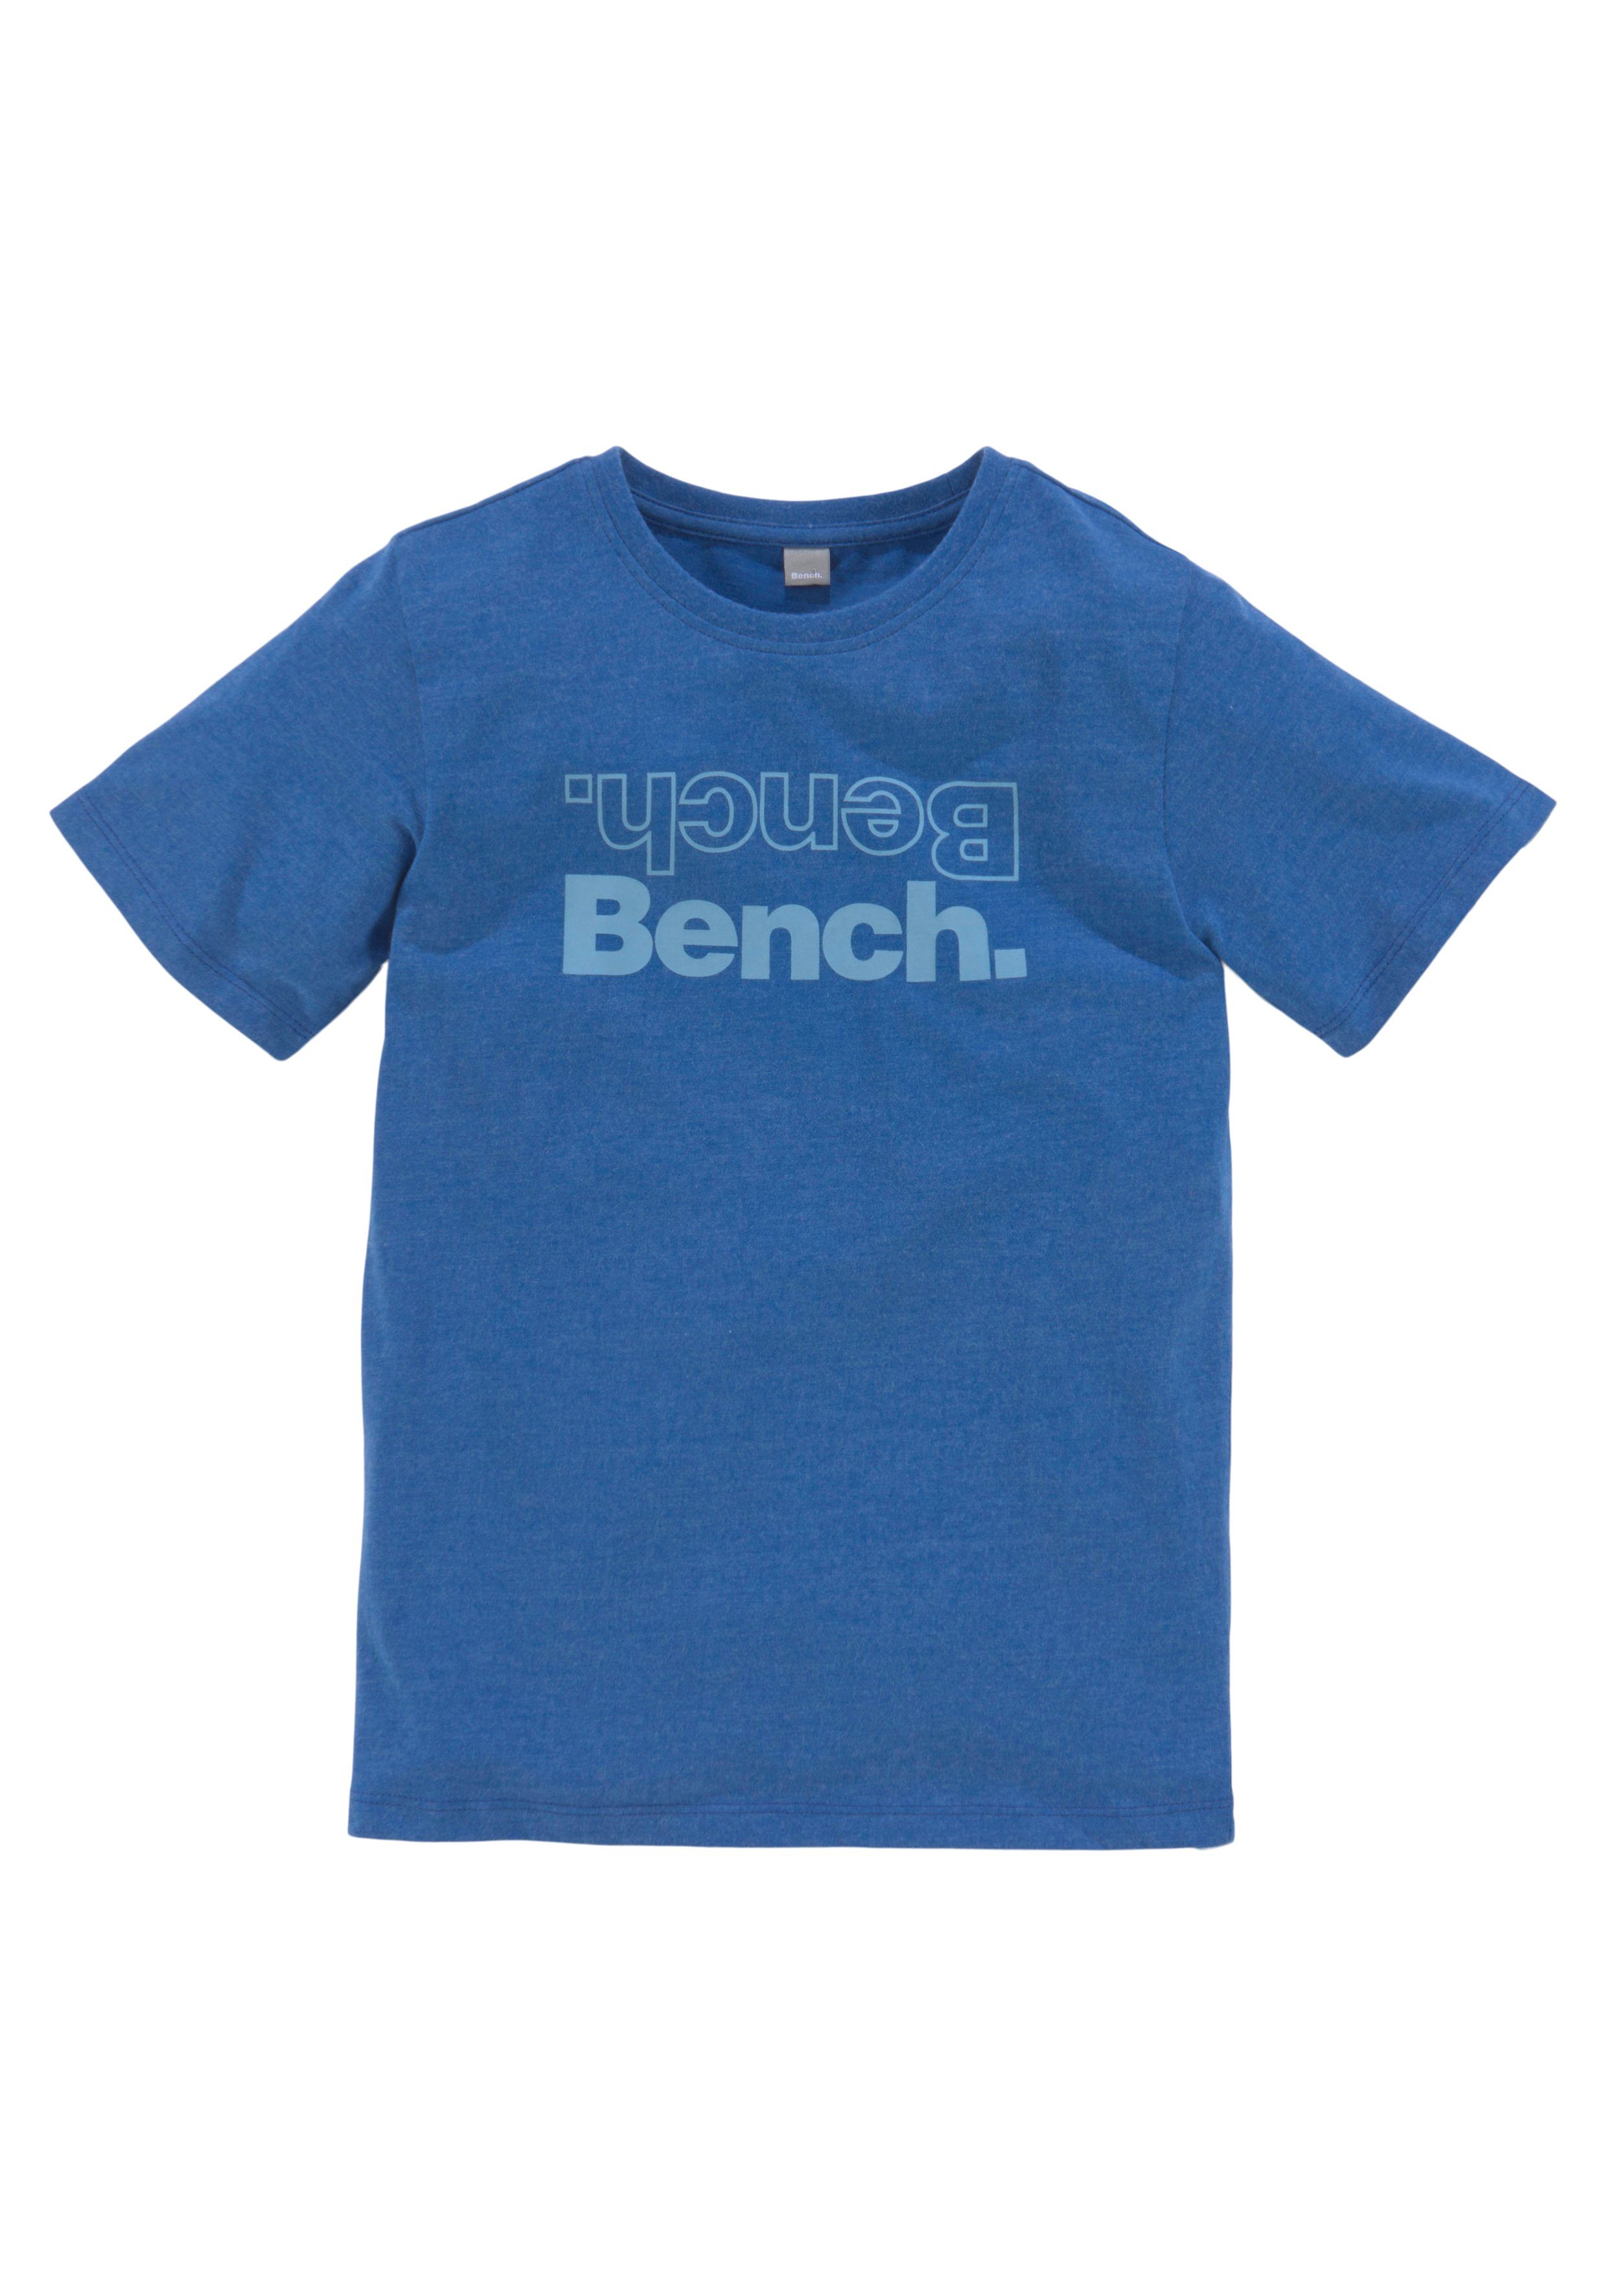 mit Brustdruck T-Shirt Bench. coolem